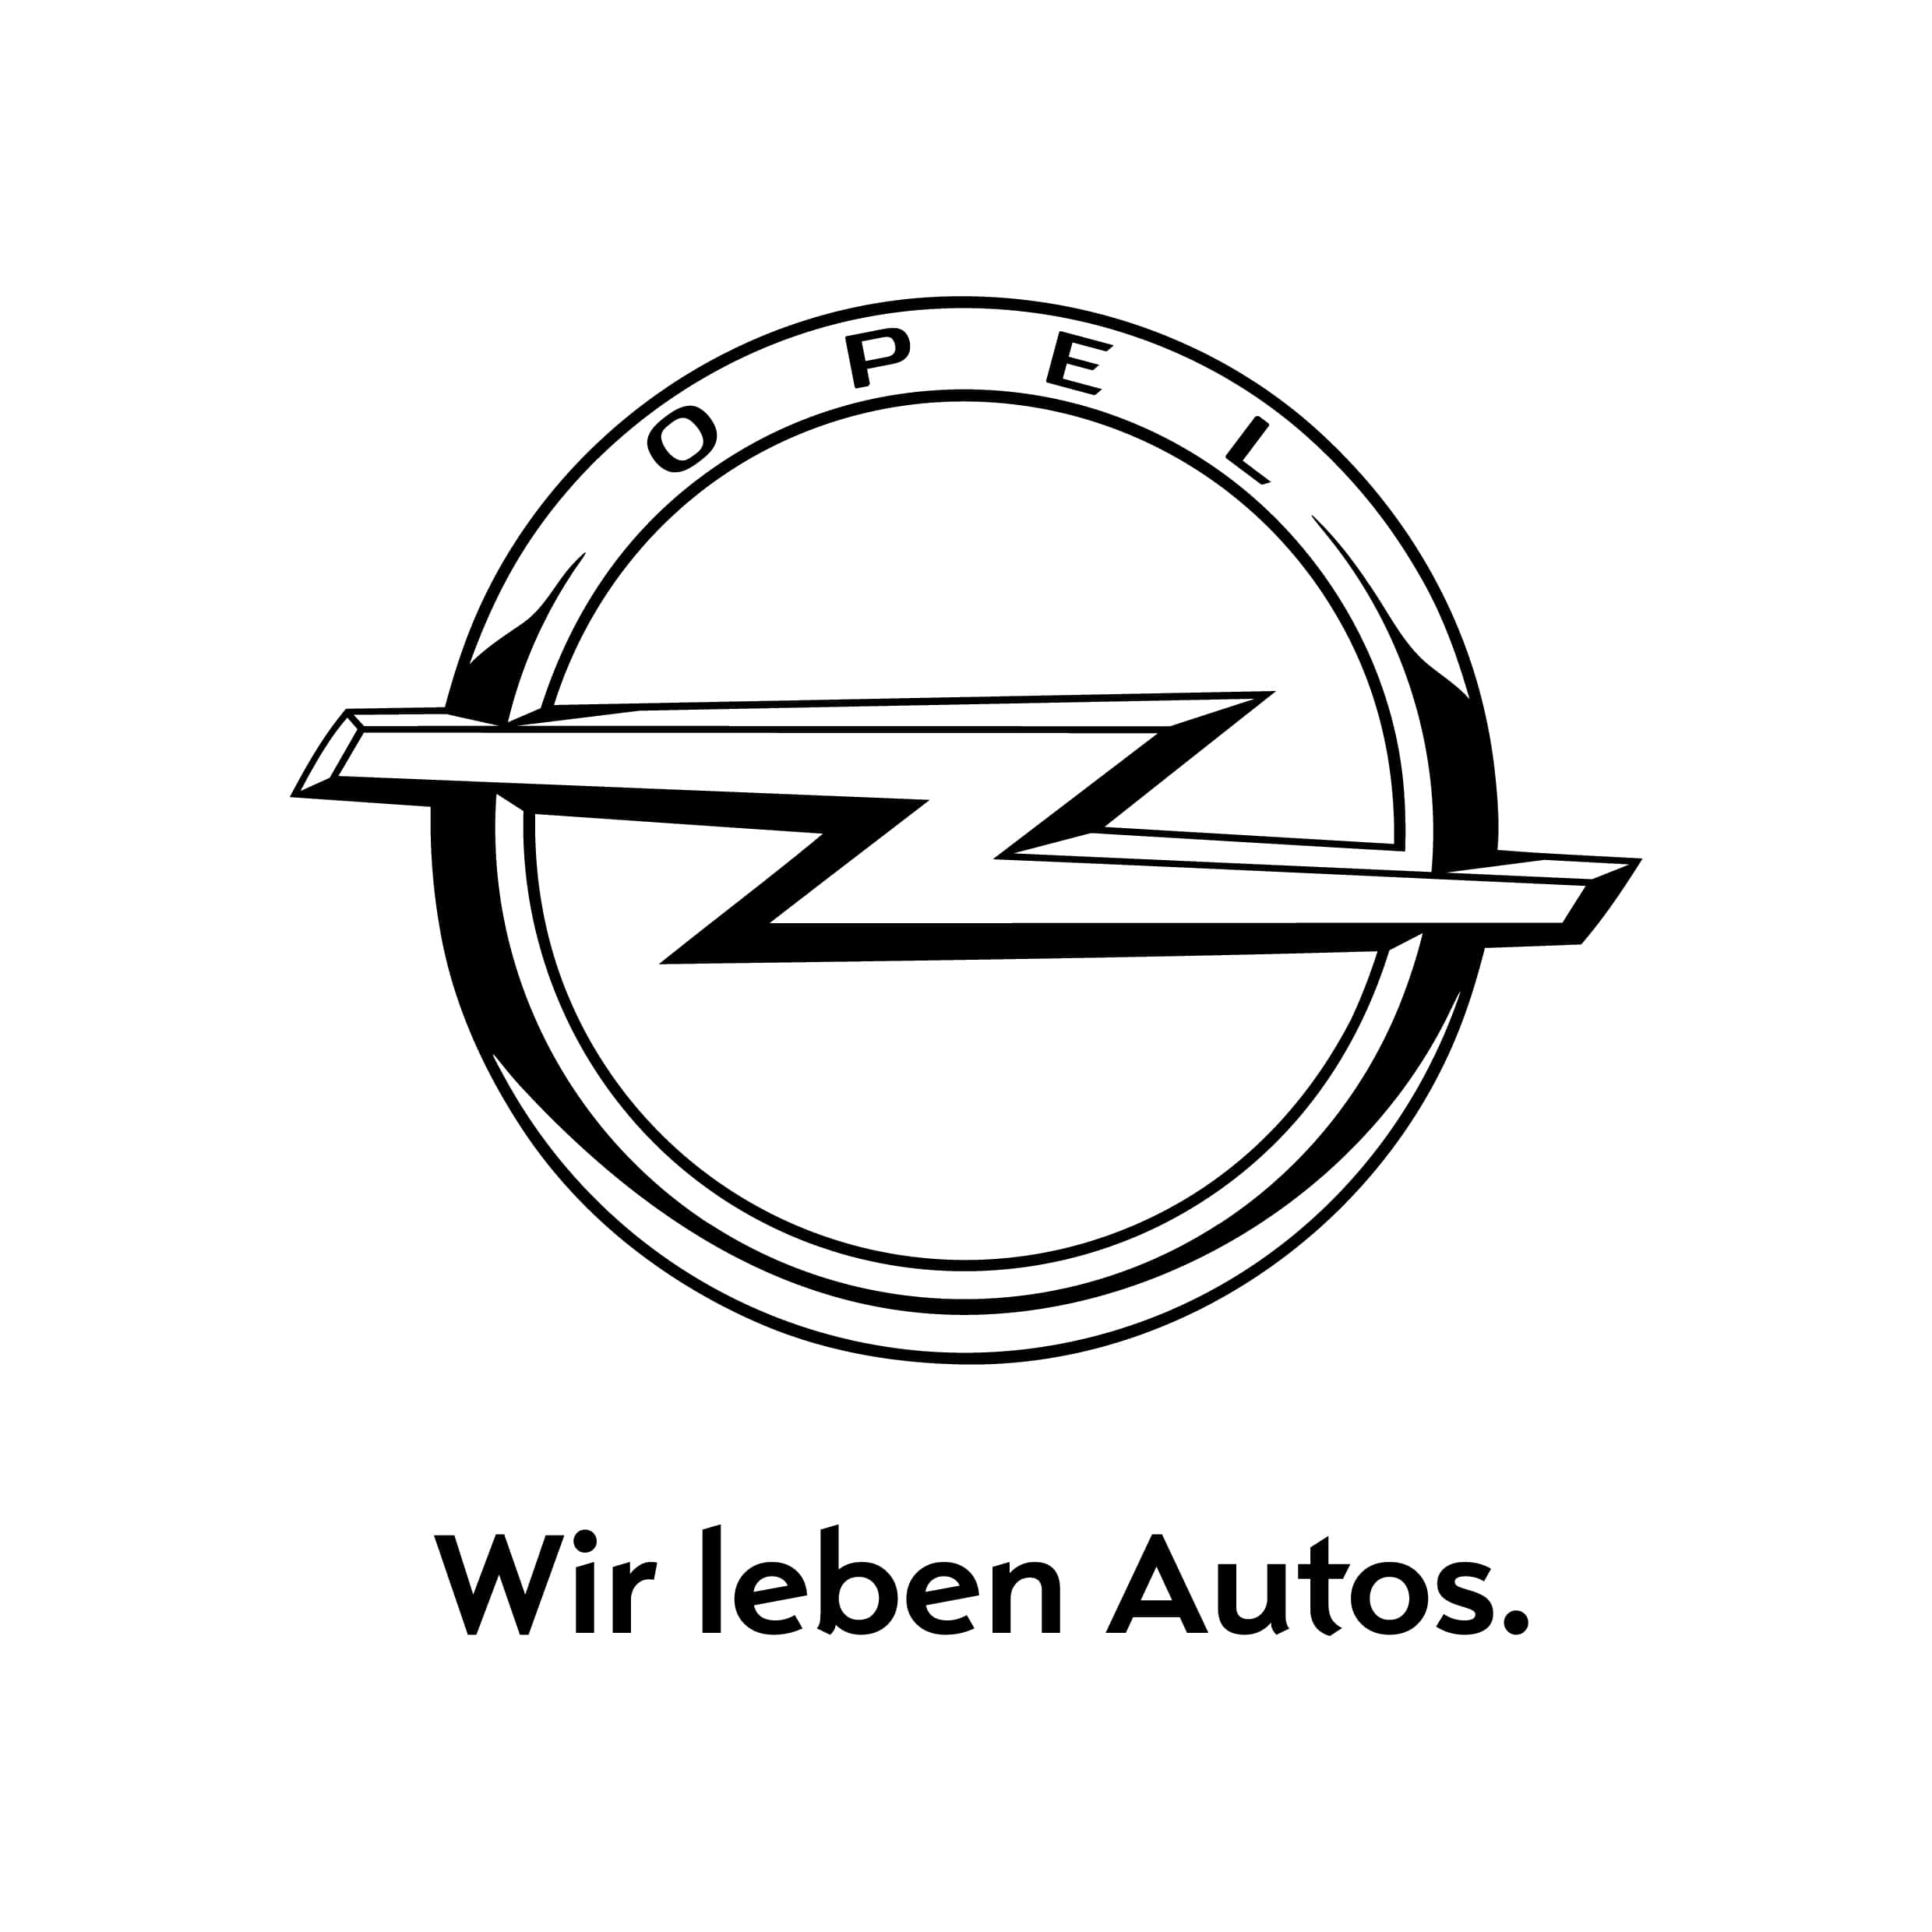 stickers-opel-ref9-autocollant-voiture-sticker-auto-autocollants-decals-sponsors-racing-tuning-sport-logo-min-min